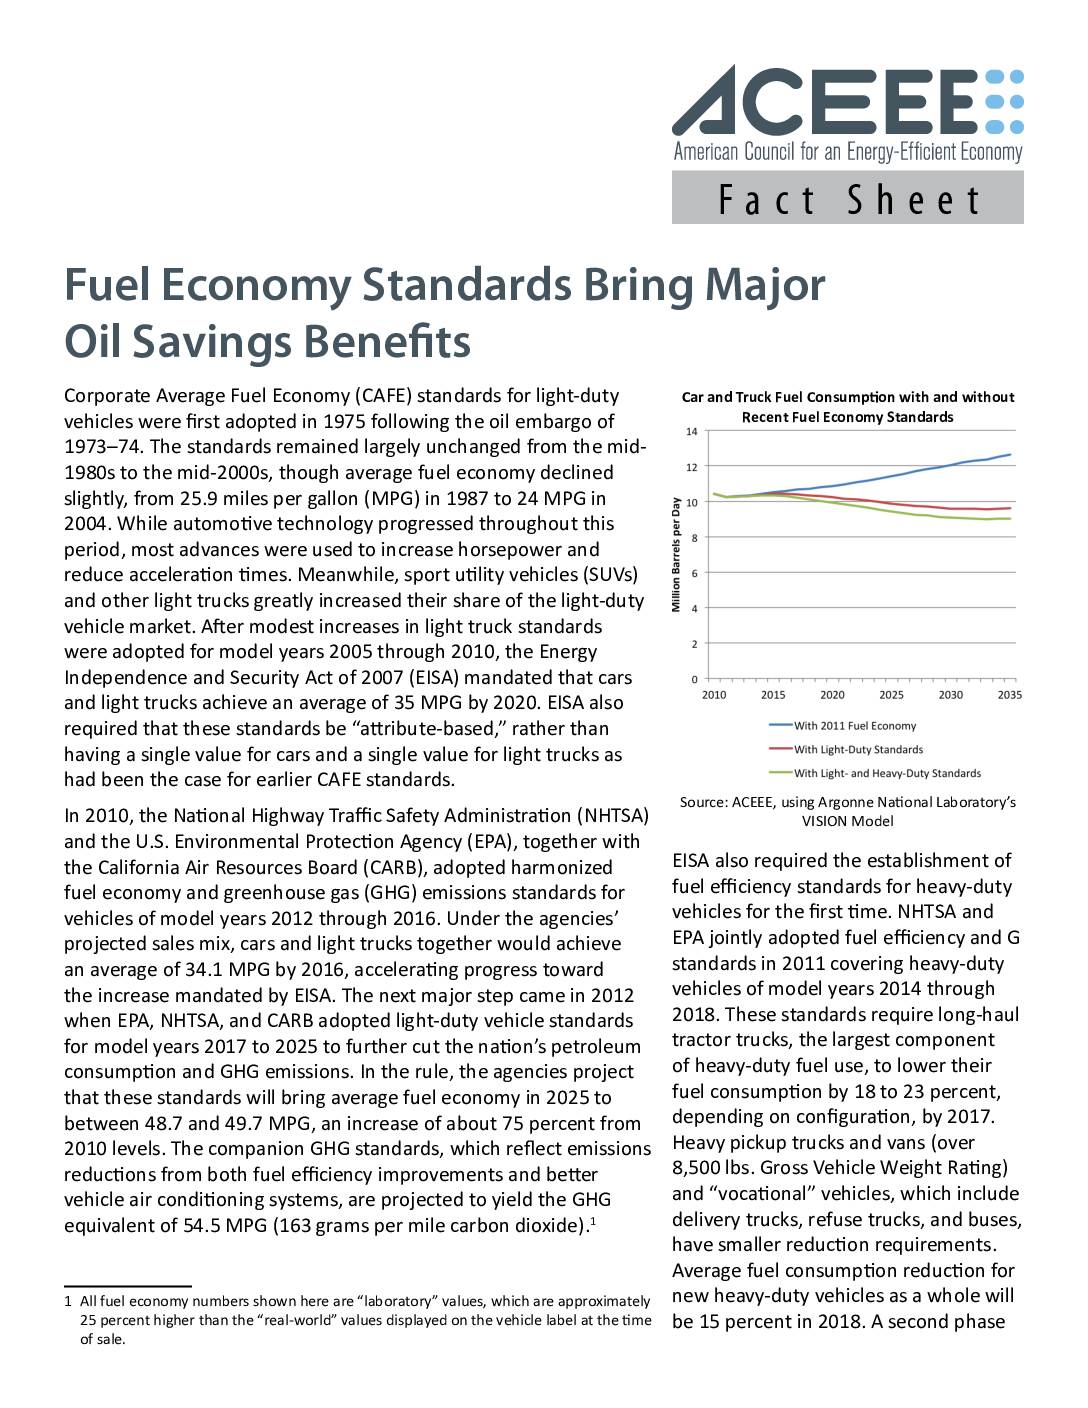 Fuel Economy Standards Bring Major Oil Savings Benefits